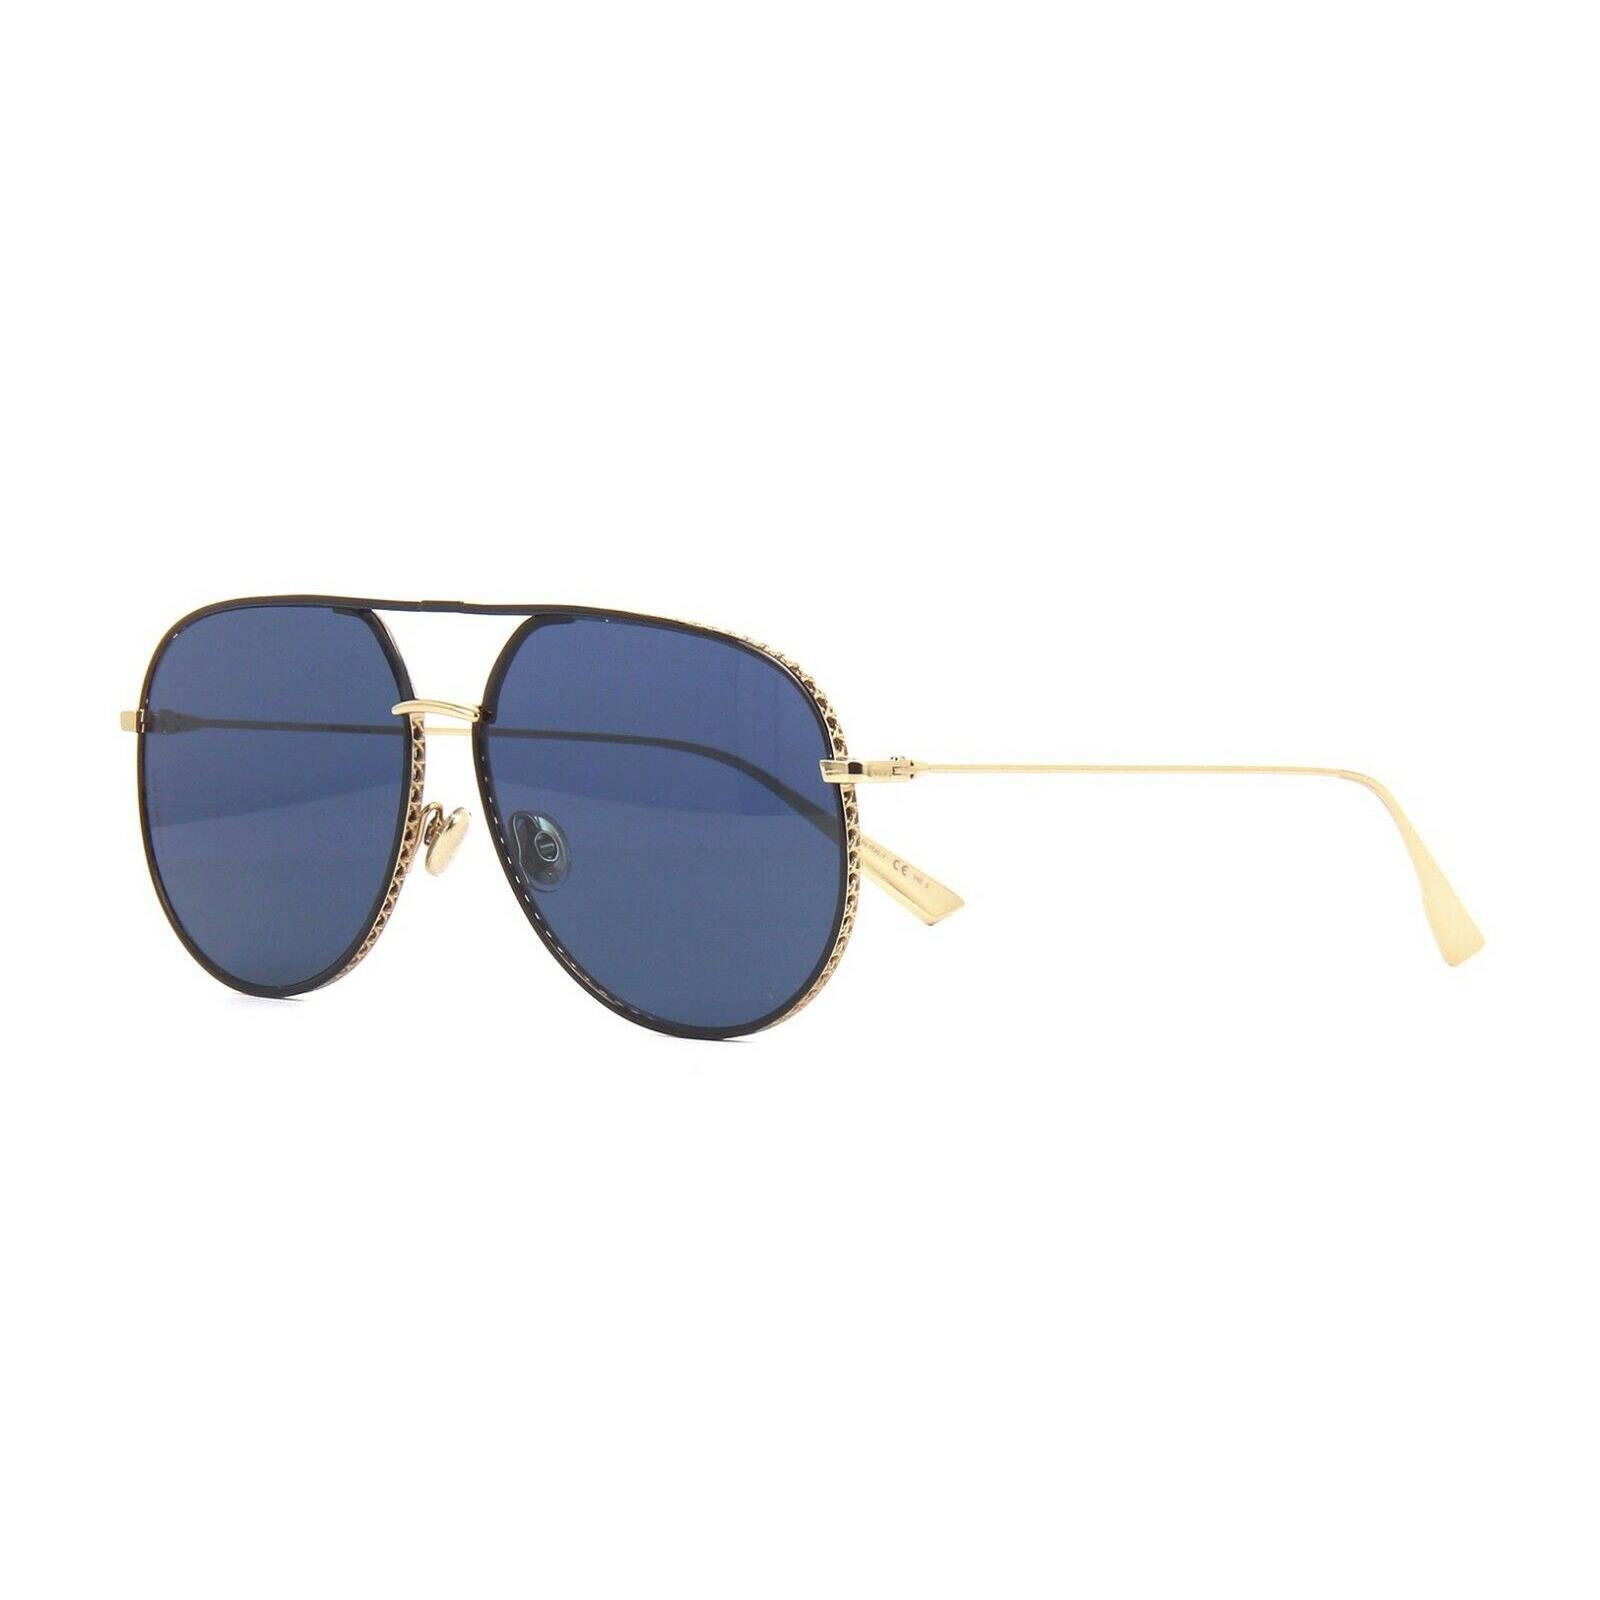 BY Dior Gold/blue 2M2/A9 Sunglasses